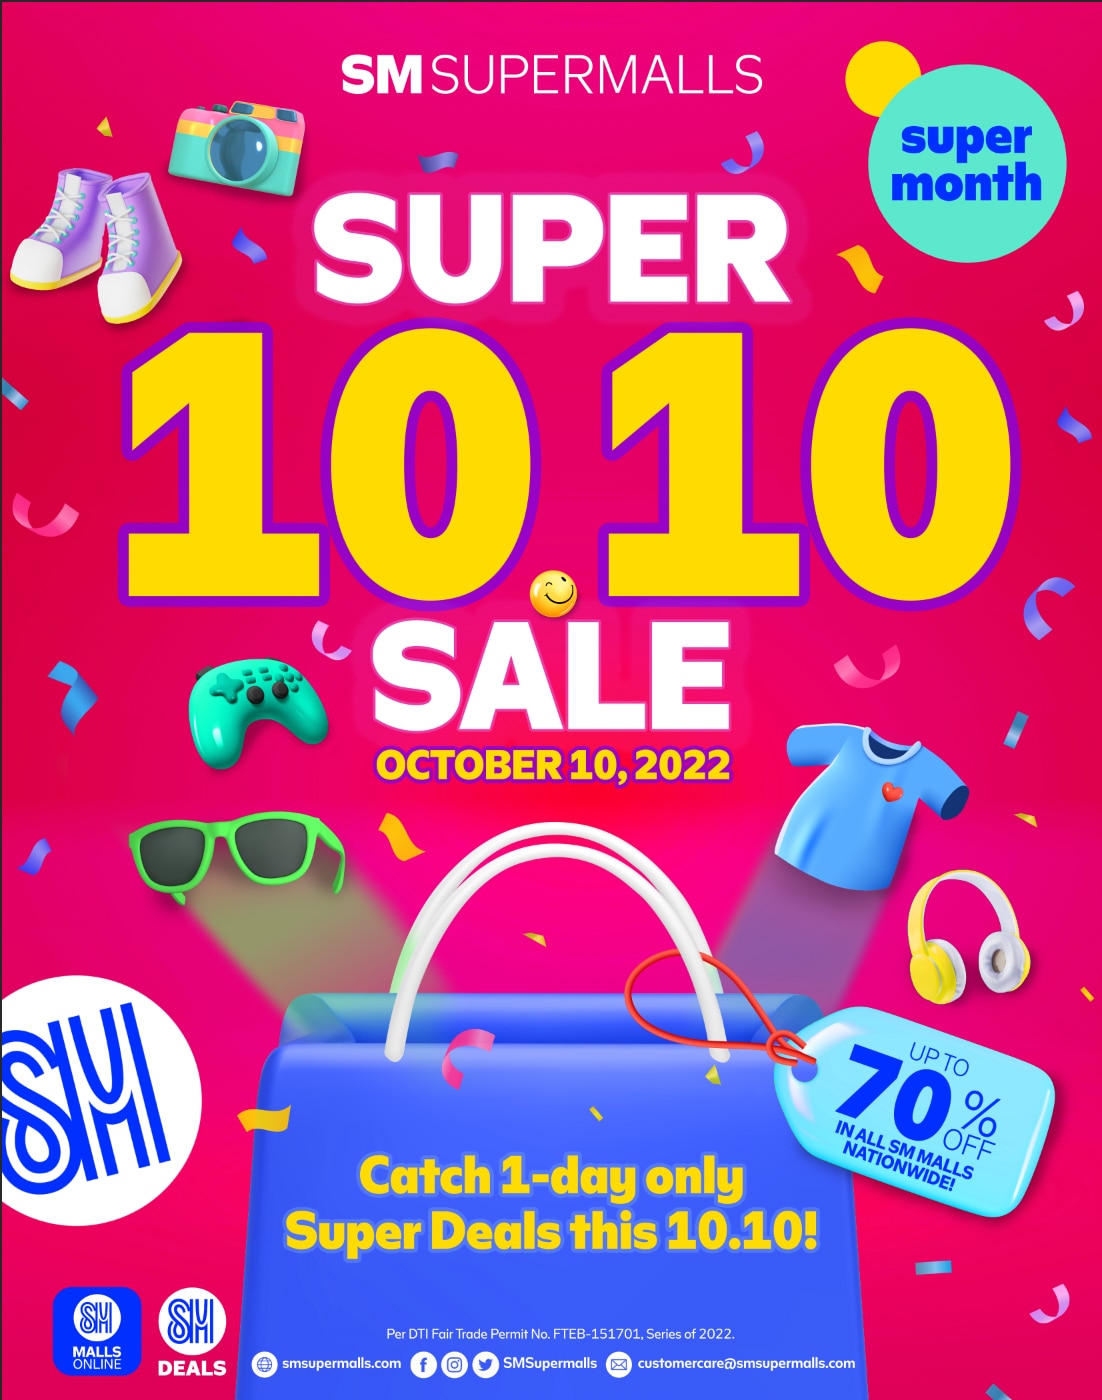 Super deals await customers at the Super 10.10 Sale. Photo source: SM